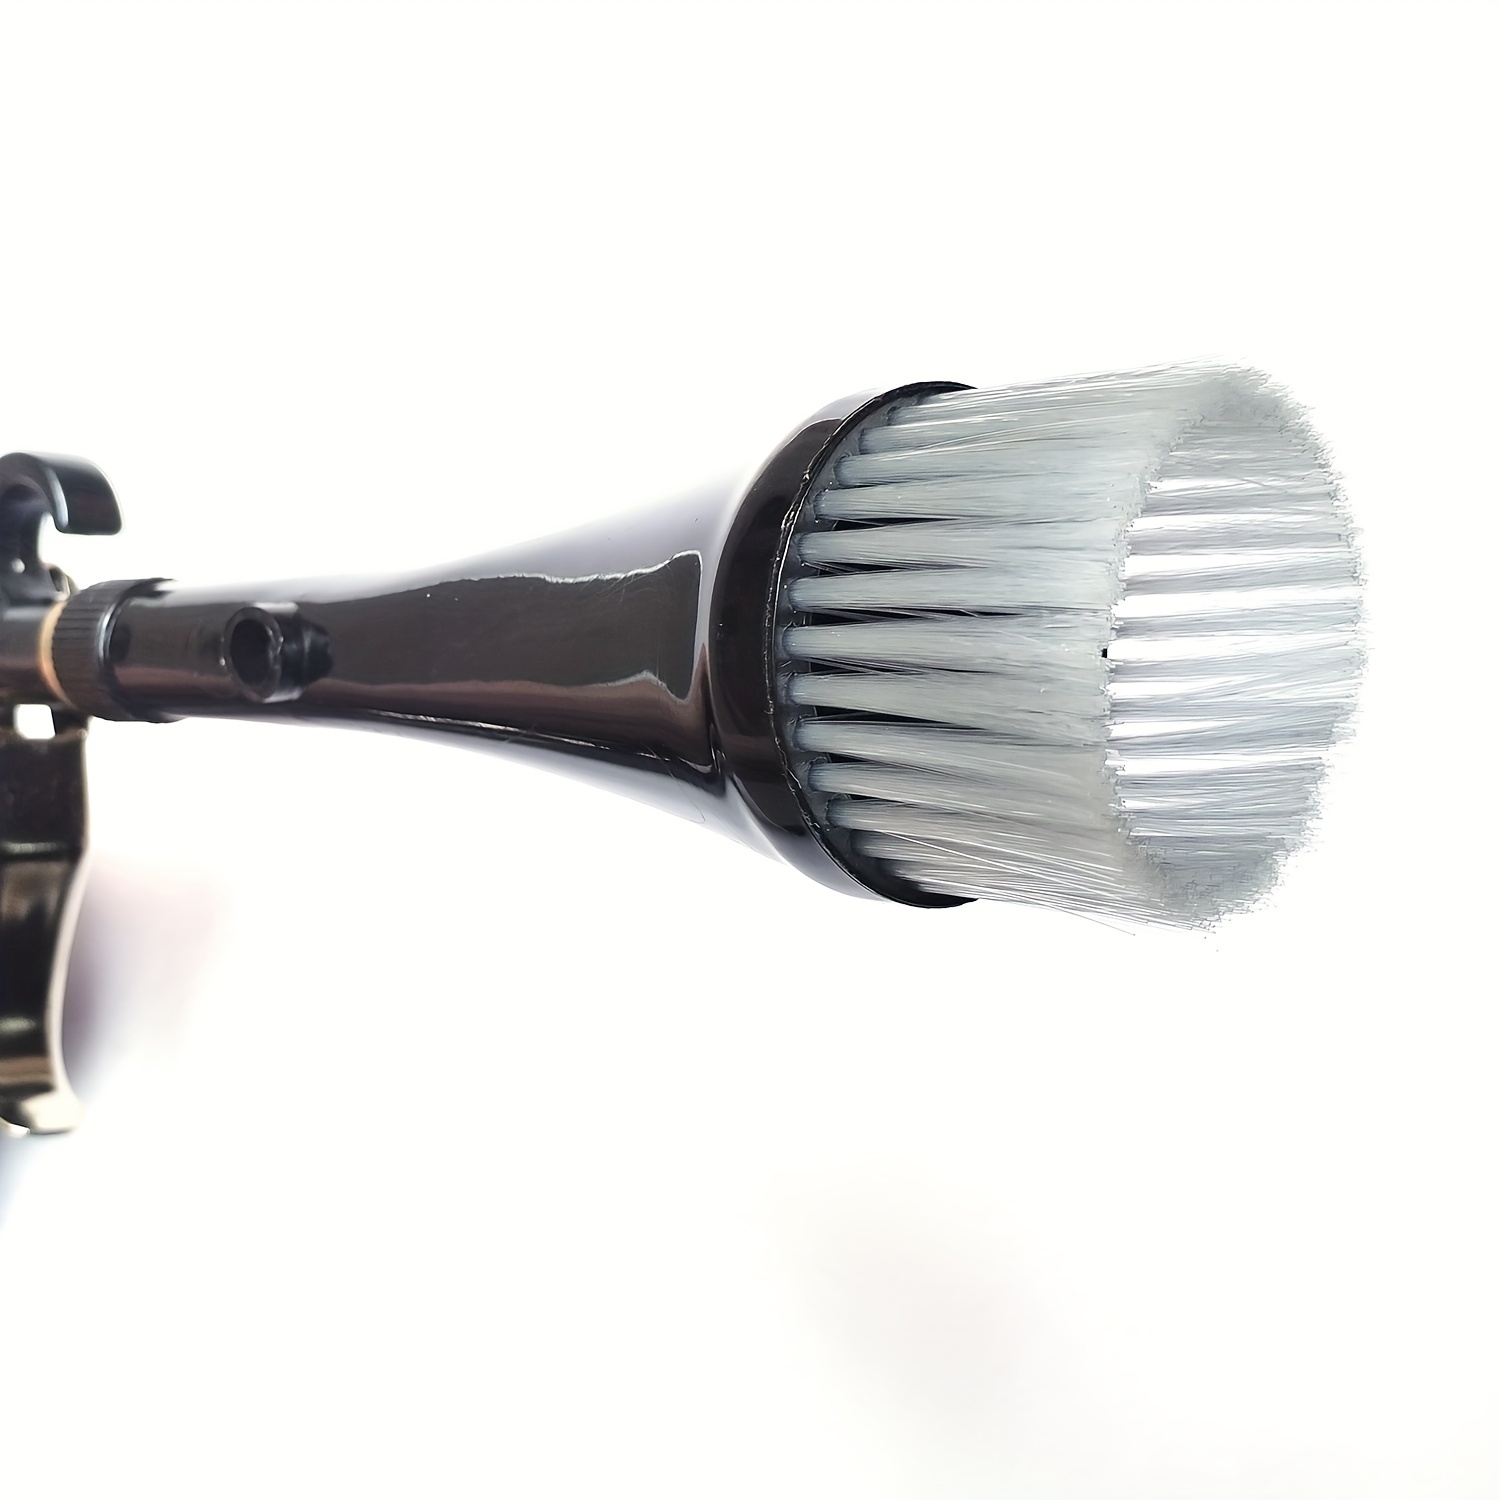 Tornador® Pulse Cleaning Gun w/Brush and Reservoir, DFXDFZ010B